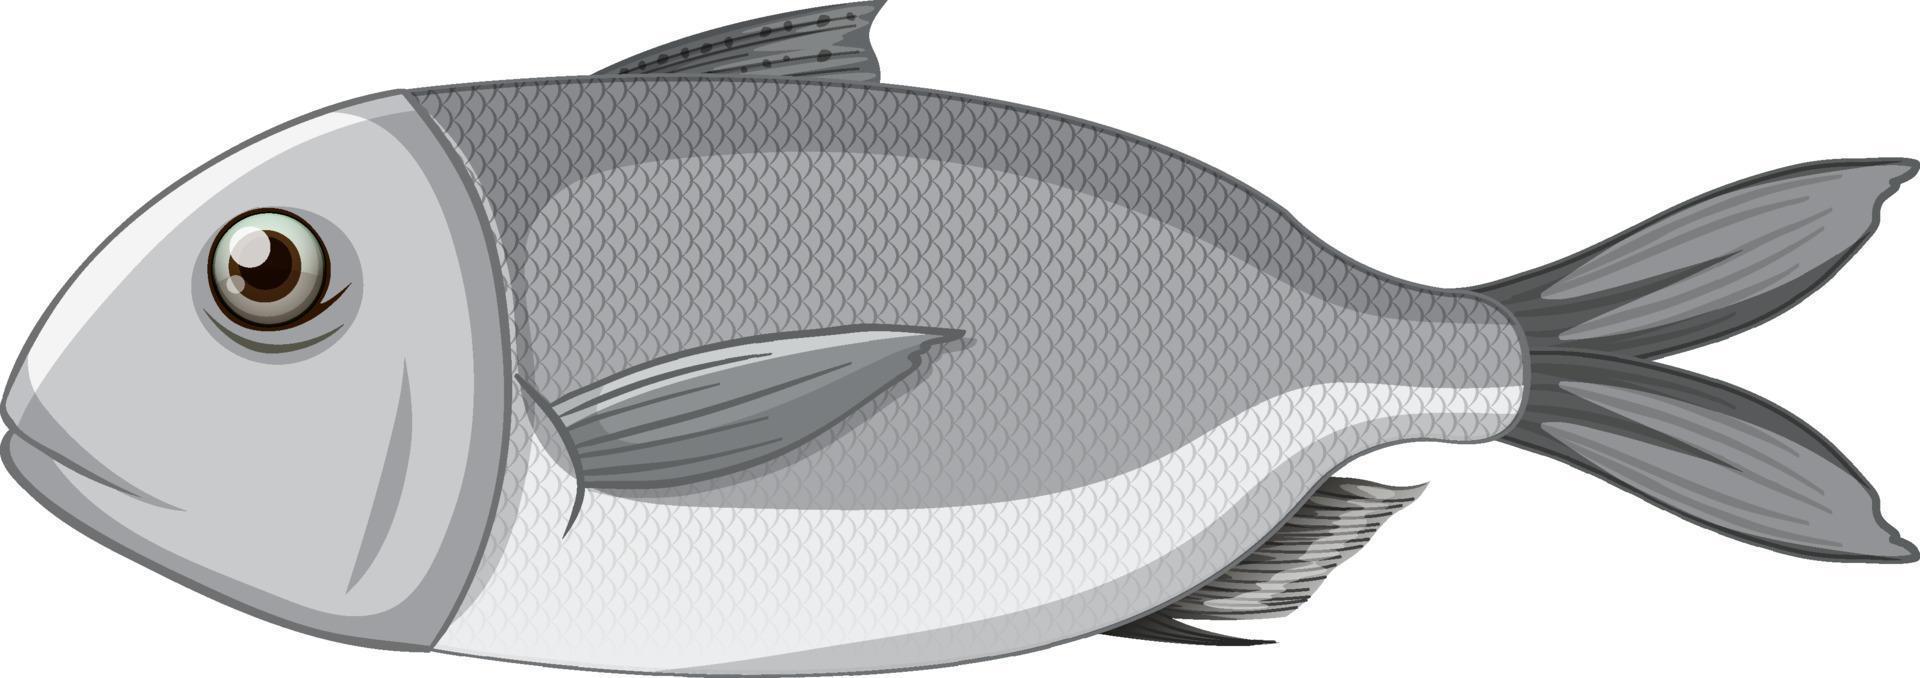 estilo simples de desenho animado de peixe isolado vetor